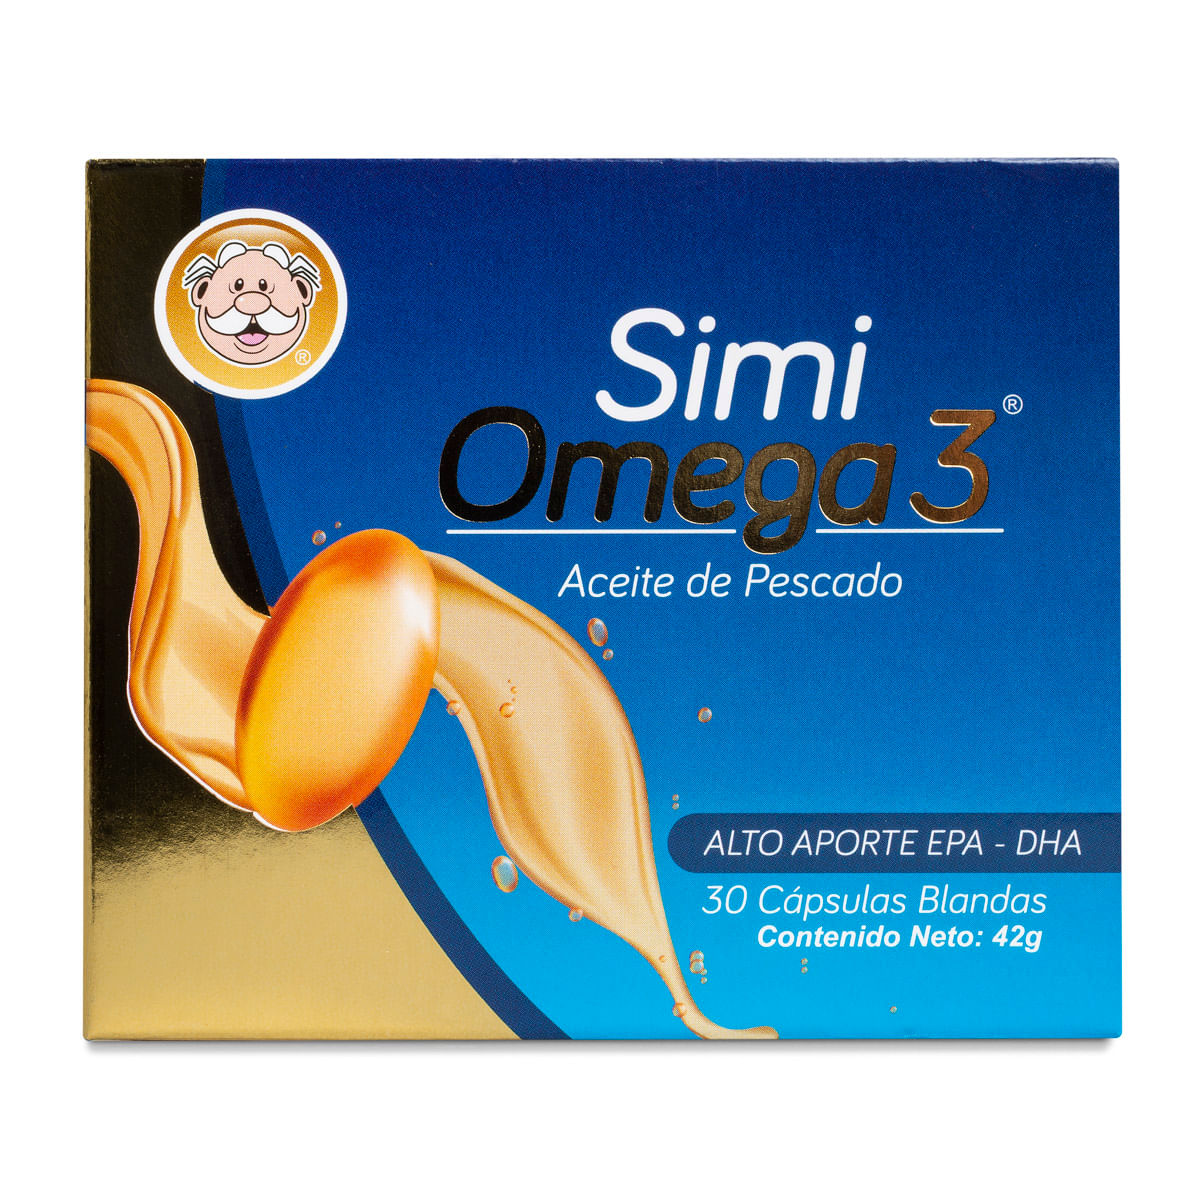 Simi Omega 3 - Aceite Pescado 1000 Mg - 30 Cápsulas